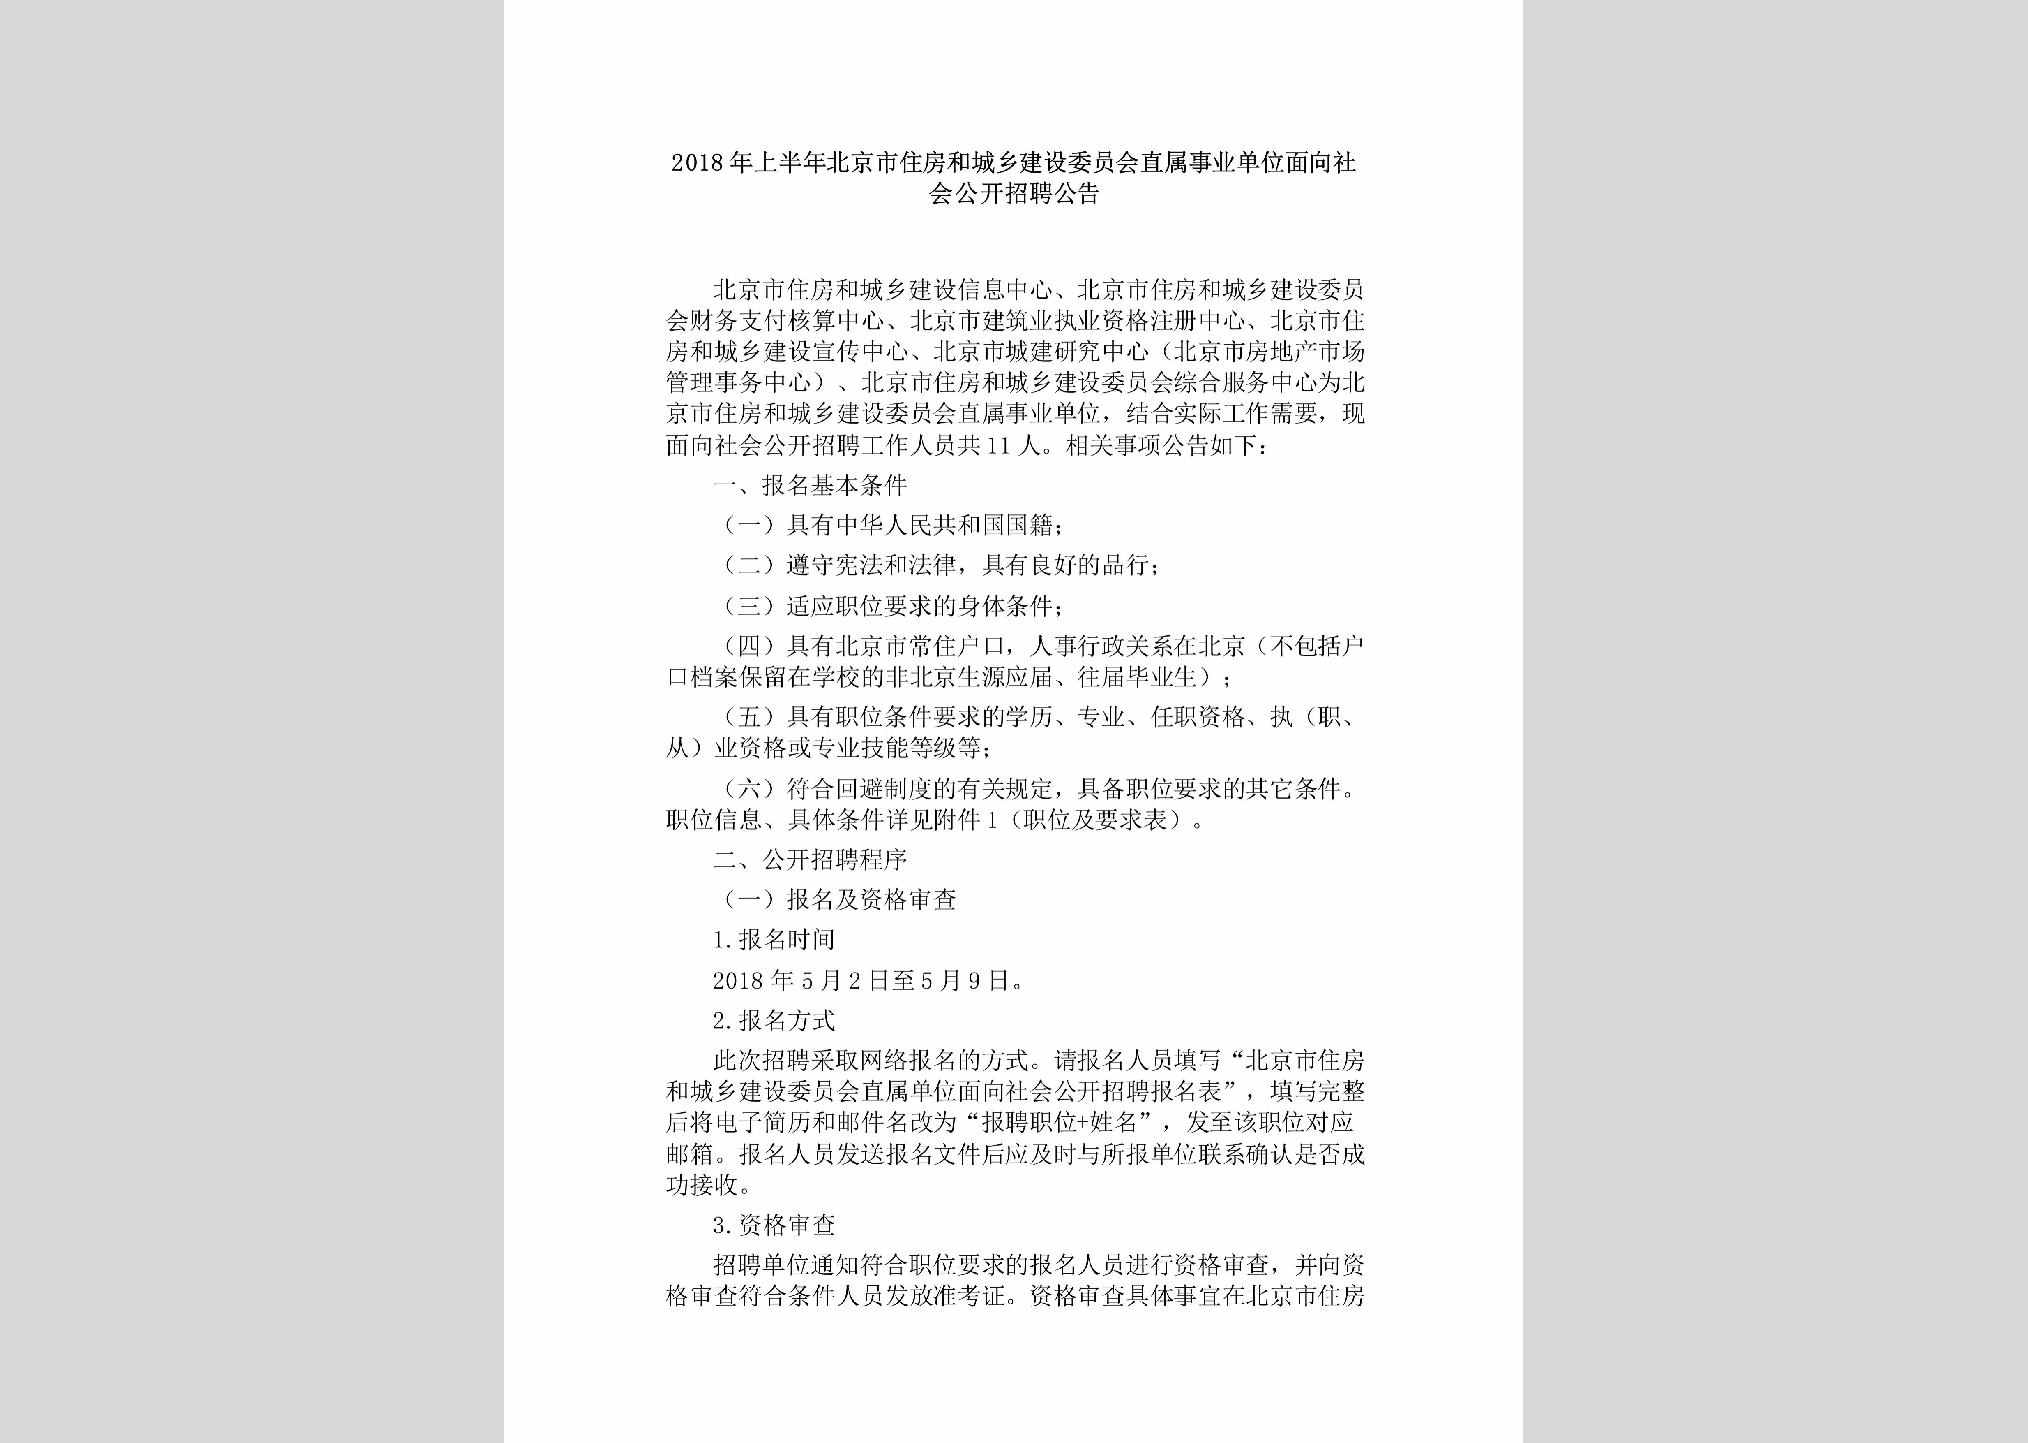 BJ-SYDWGKZP-2018：2018年上半年北京市住房和城乡建设委员会直属事业单位面向社会公开招聘公告